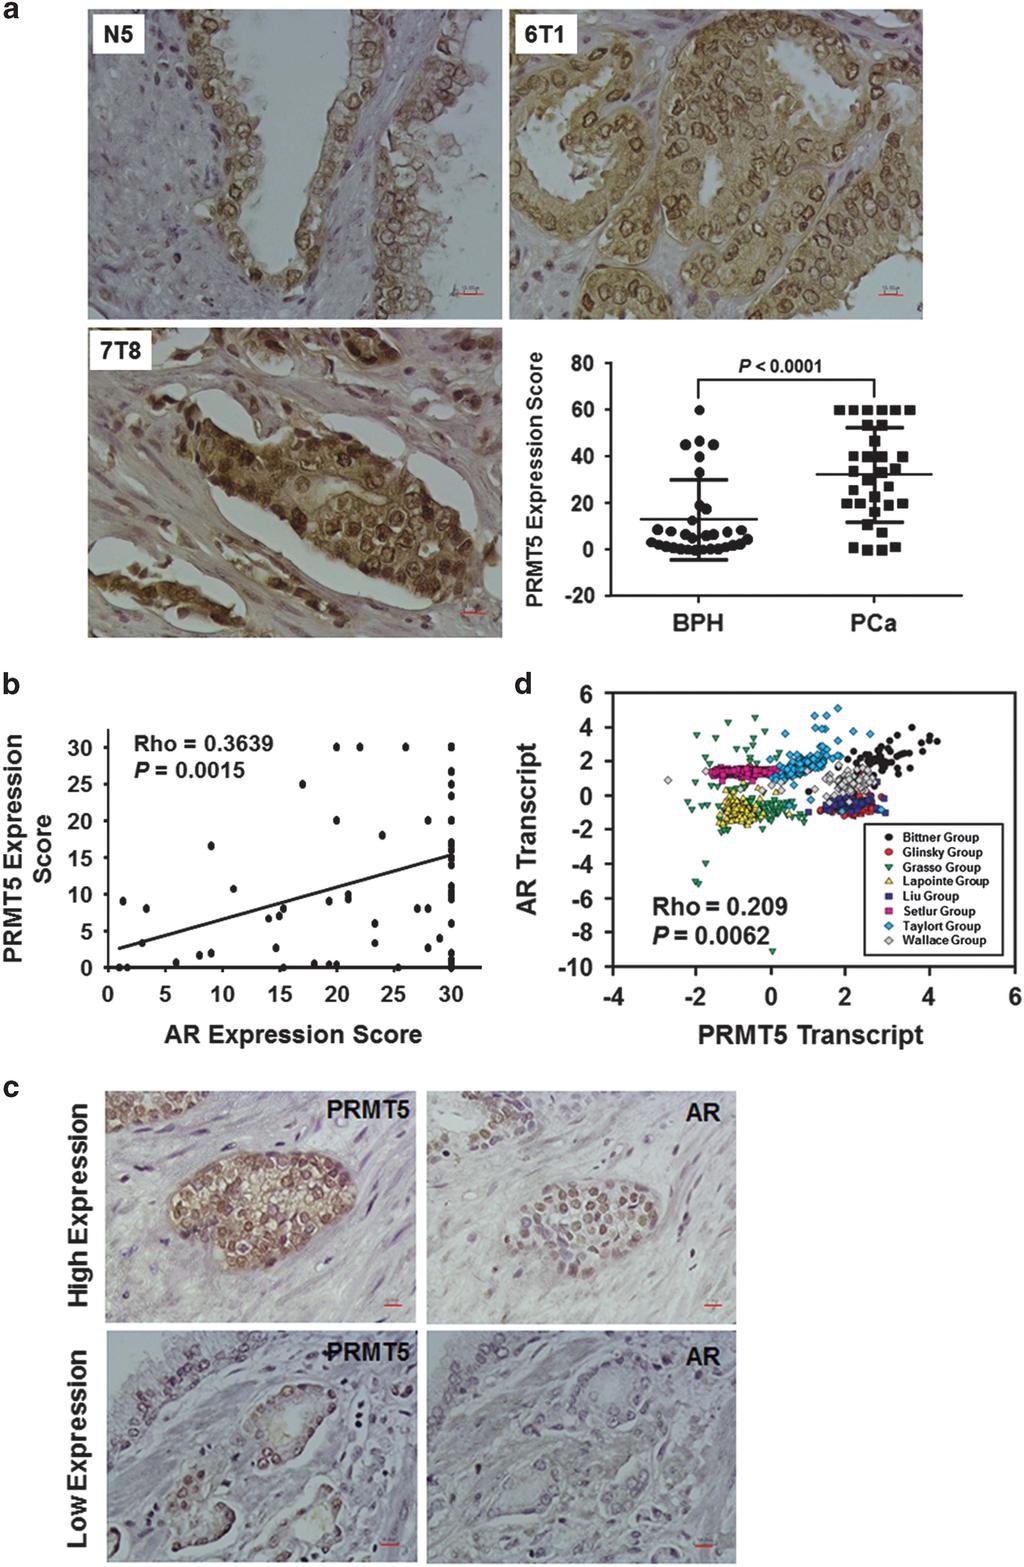 1228 Epigenetic activation of AR transcription by PRMT5 X Deng et al Figure 4. PRMT5 expression correlates positively with AR expression in prostate cancer.